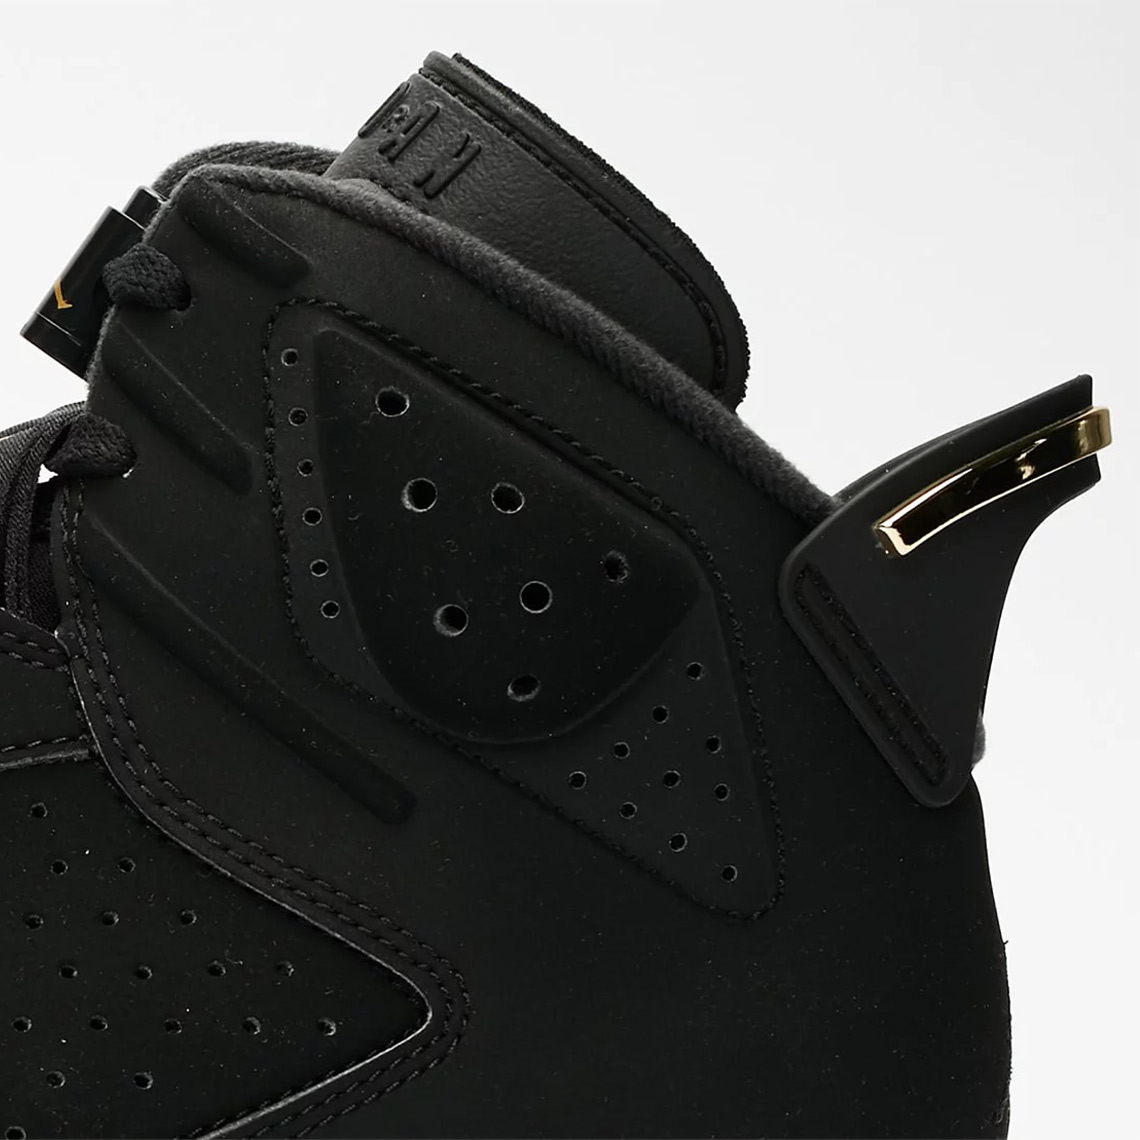 Air Jordan 6 DMP (Defining Moments Pack) Release Info | SneakerNews.com